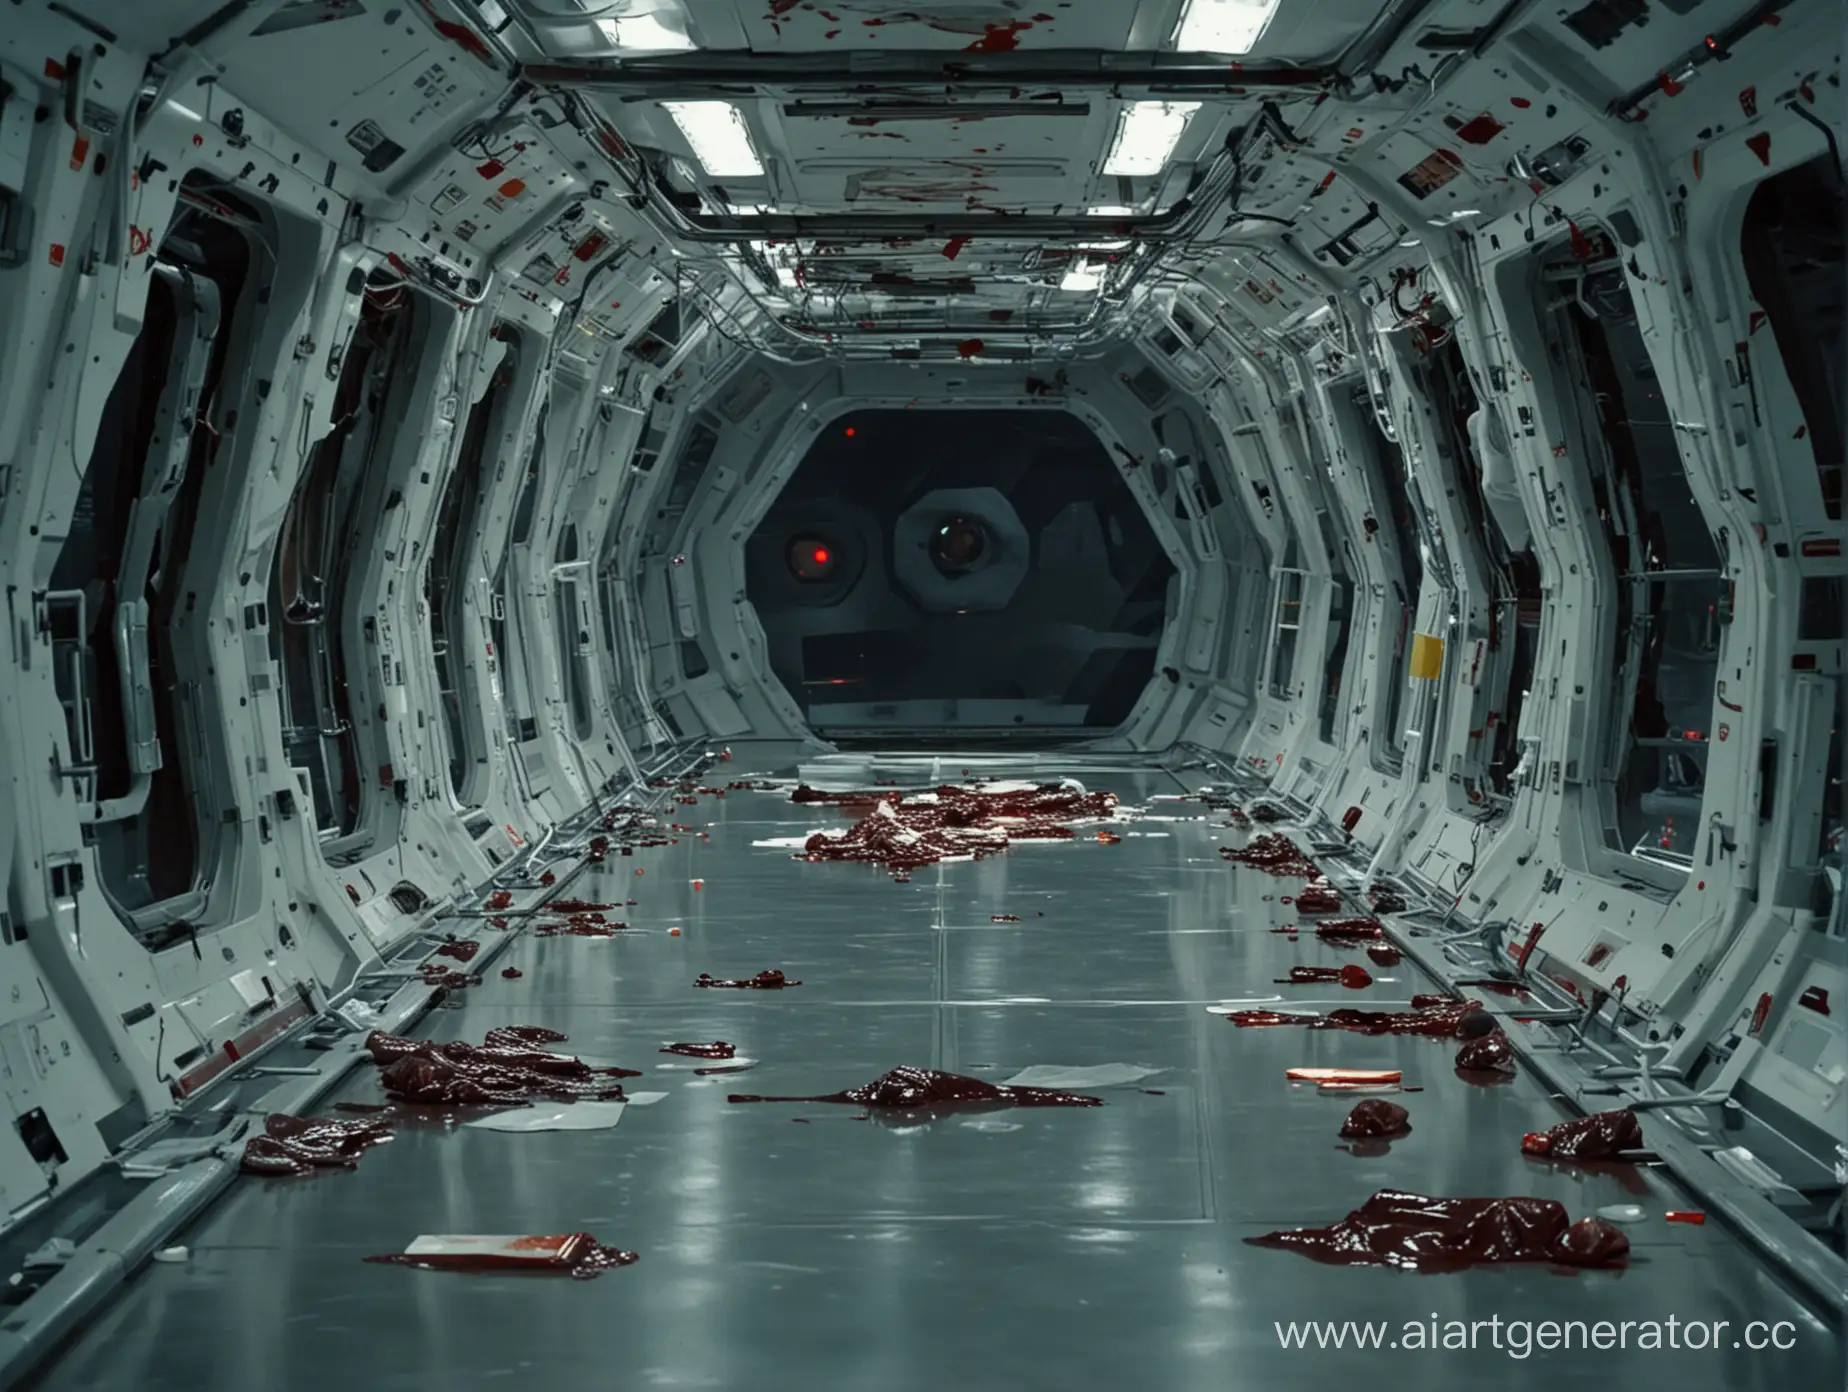 insade spaceship, space, laboratory, blood on floor, corpses,
